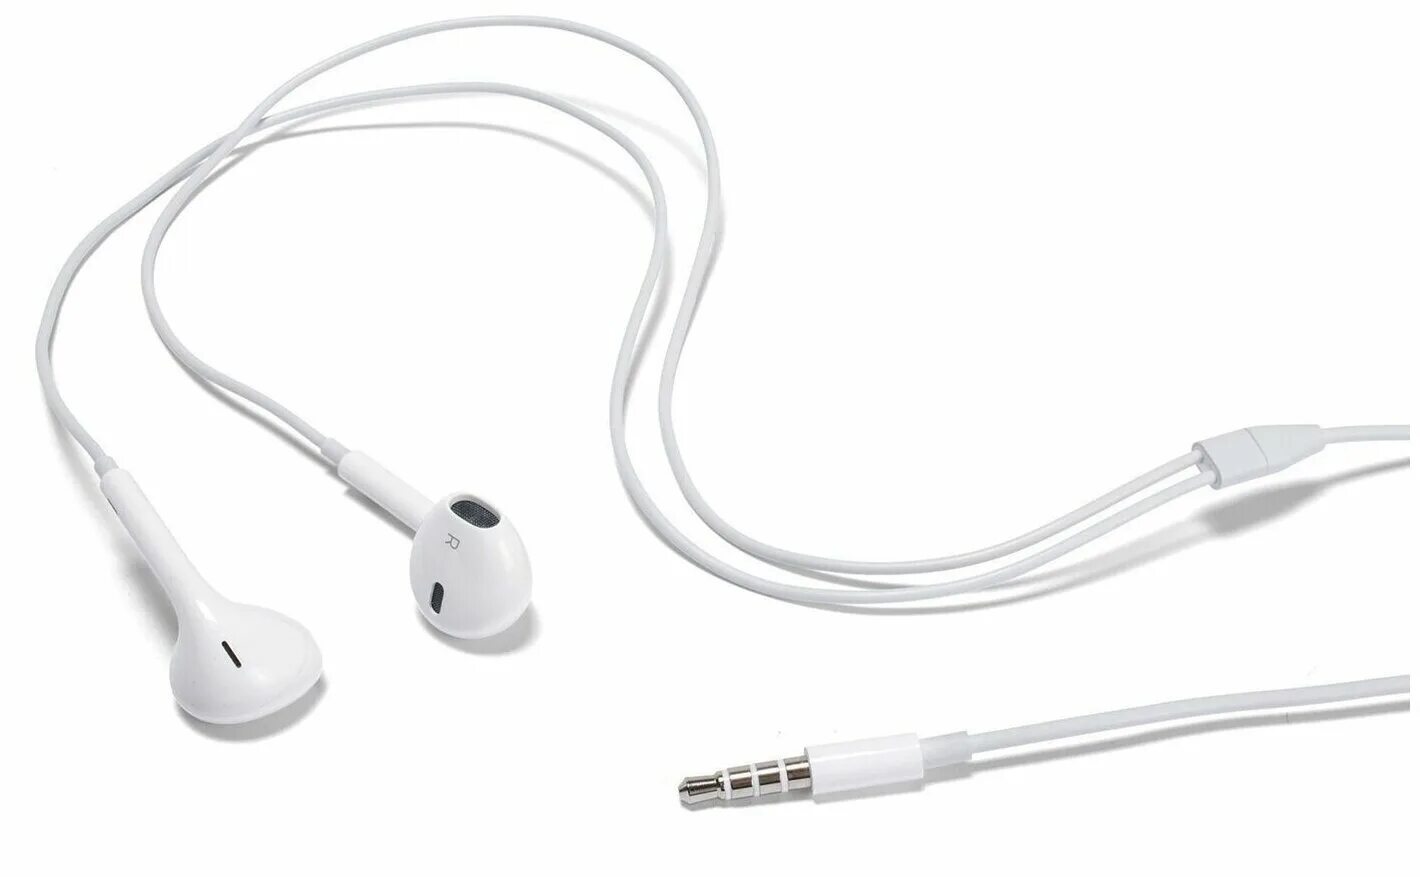 Наушники Apple Earpods (3.5 мм), белый. Наушники Apple Earpods с разъёмом 3.5. Md827fe/a наушники для Apple Earpods. Наушники с микрофоном Apple Earpods Headphone Plug (mnhf2zm/a). Айфоновские наушники к андроиду